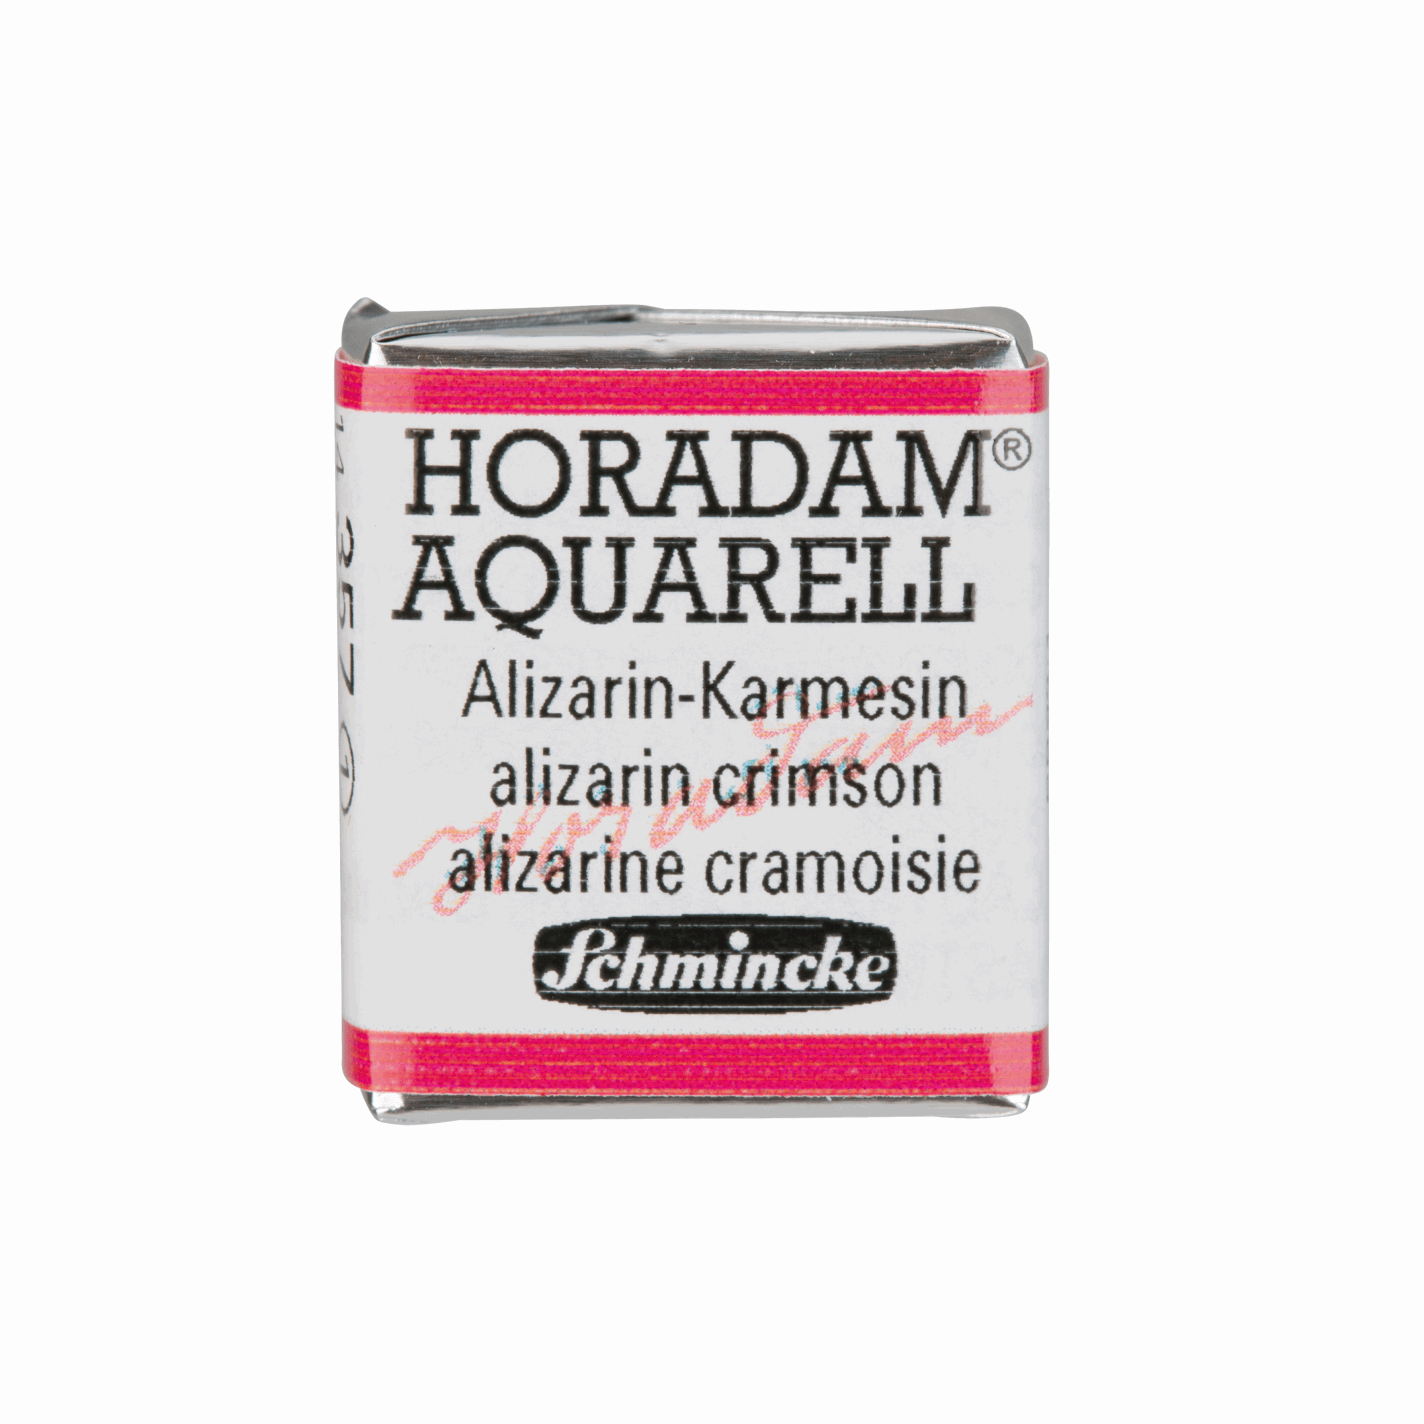 Schmincke Horadam Aquarell pans 1/2 pan Alizarin Crimson